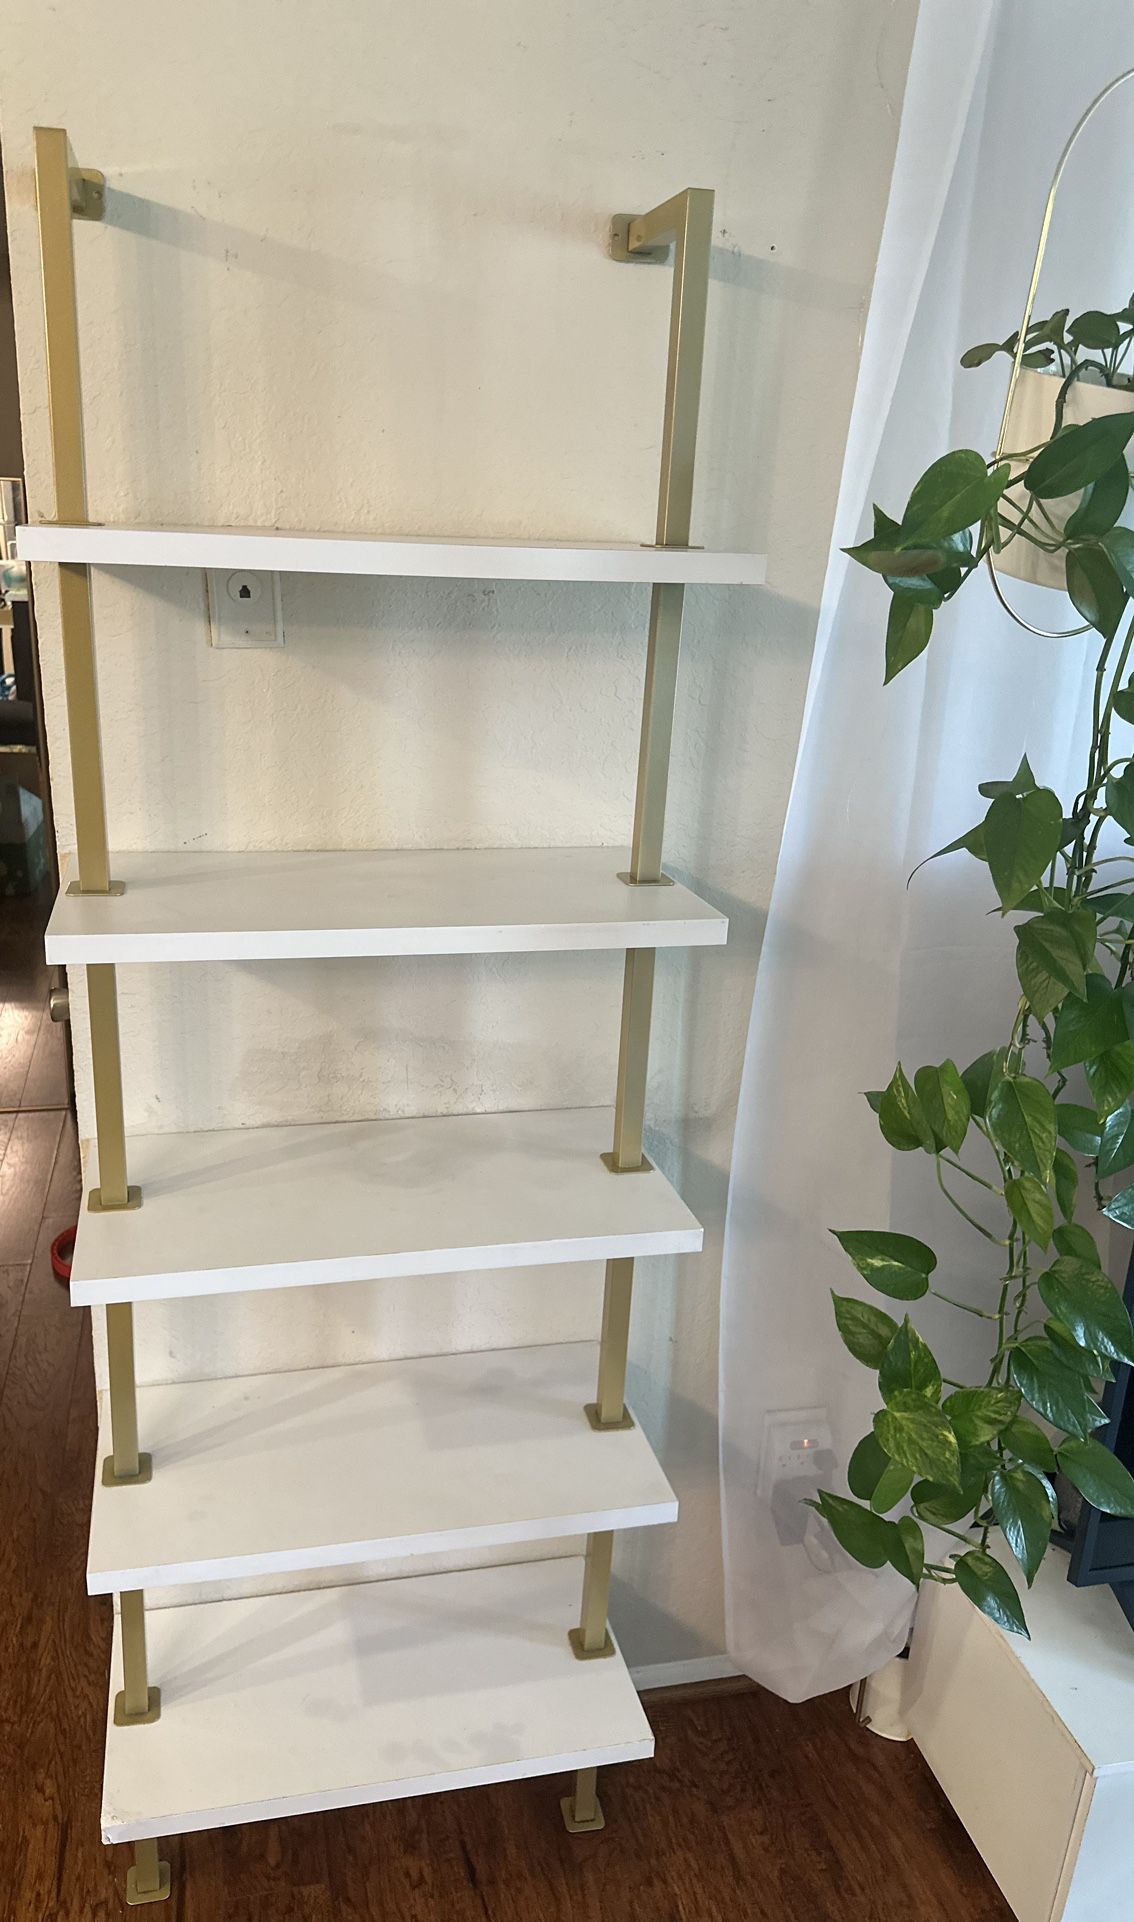 5-Shelf Modern Bookcase, Open Wall Mount Ladder rBookshelf with Industrial Metal Frame, White/Gold